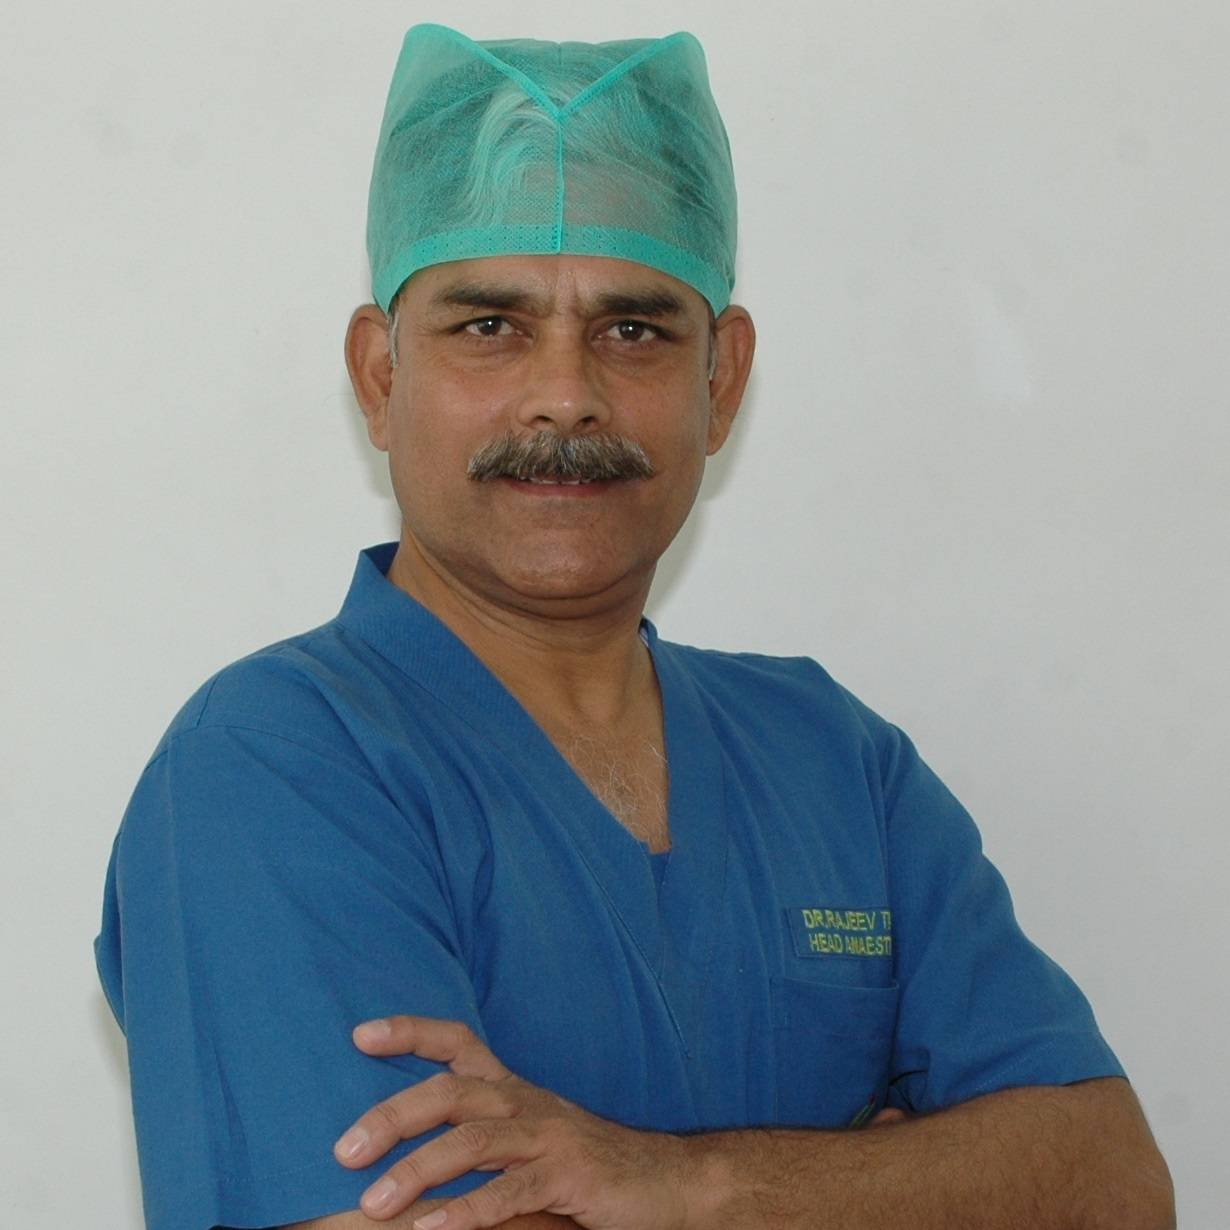 Dr. Rajeev lochan  Tiwari from  324, Shanti Path, Patrakar Colony , Tilak Nagar ,Jaipur, Rajasthan, 302004, India 28 years experience in Speciality Anesthesiology | Cardiac Anesthesia | Kayawell